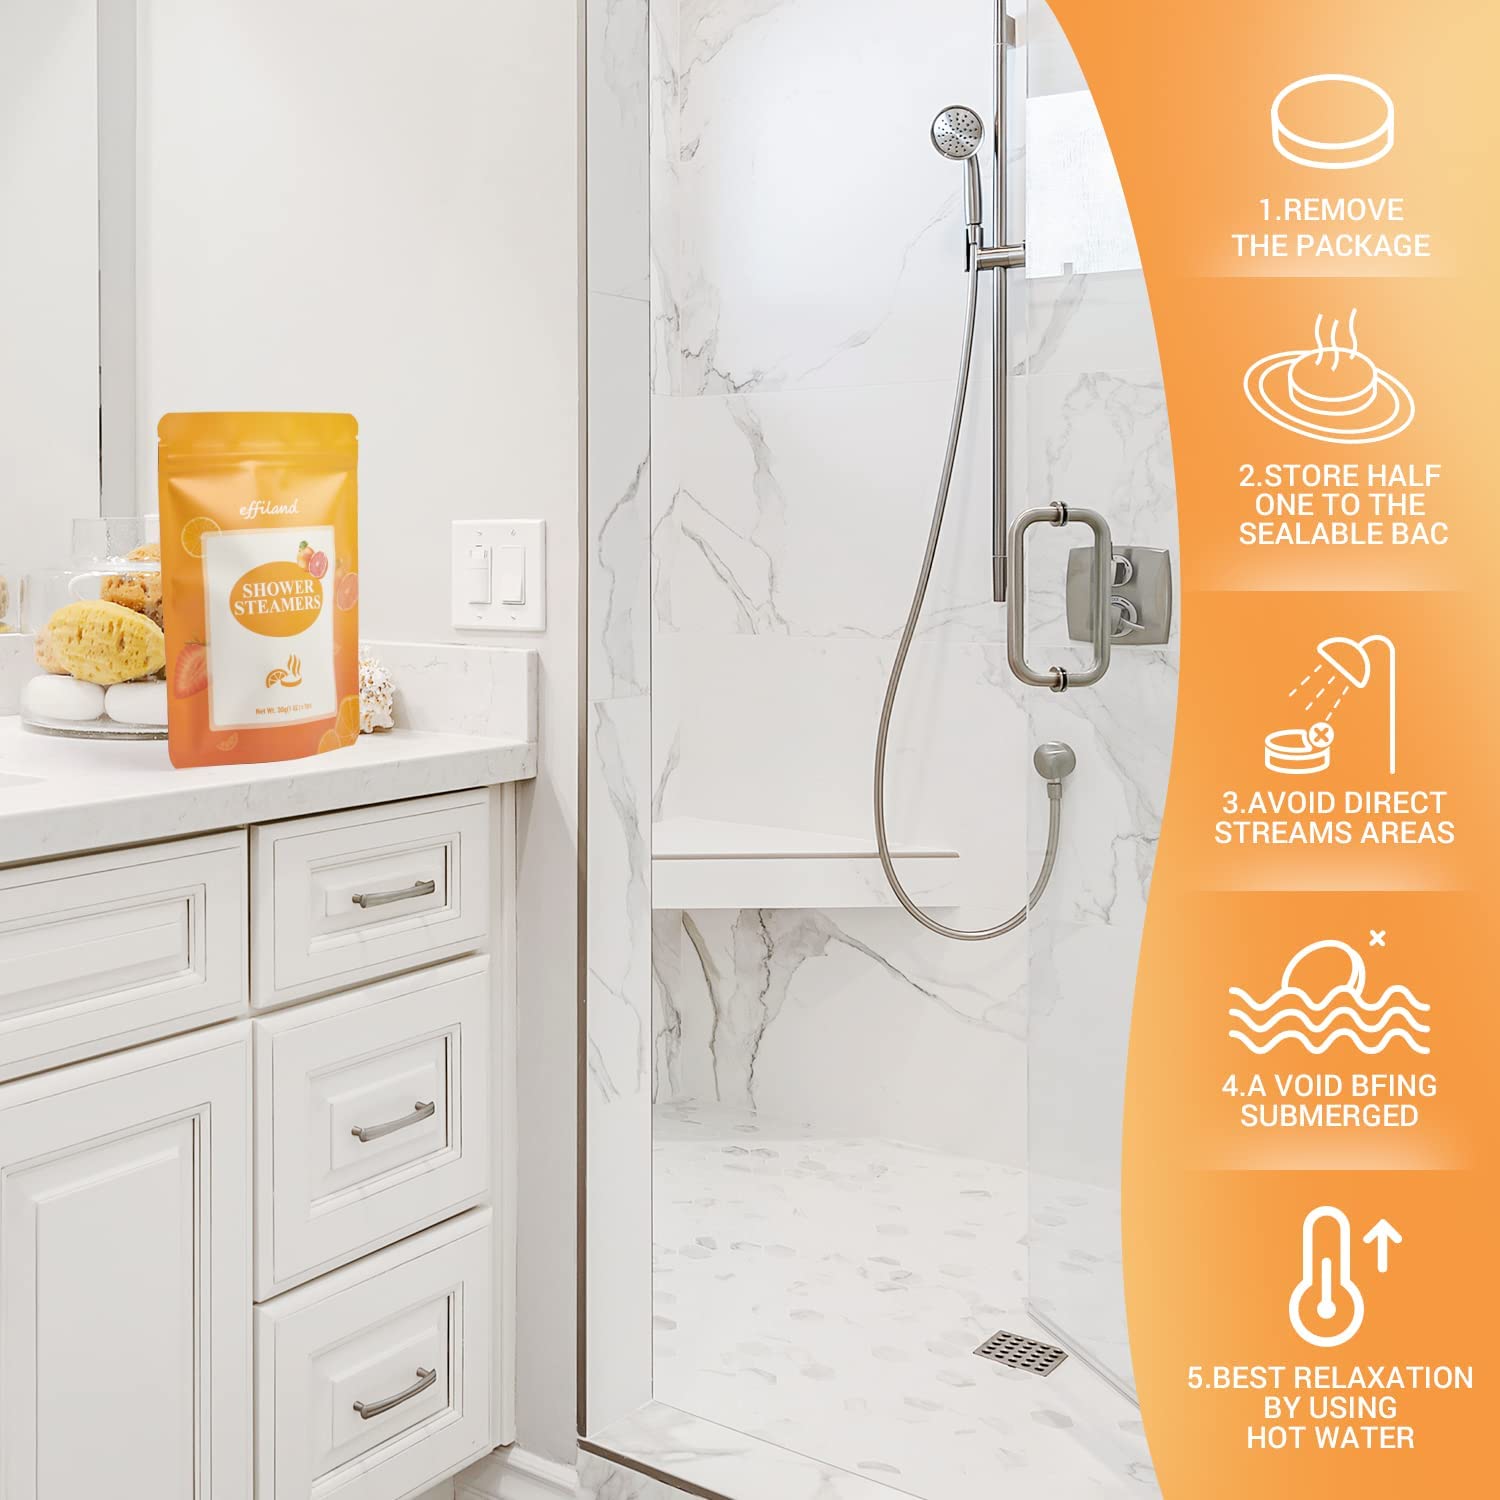 EFFILAND Shower Steamers Aromatherapy-Sweet Orange(7pcs)